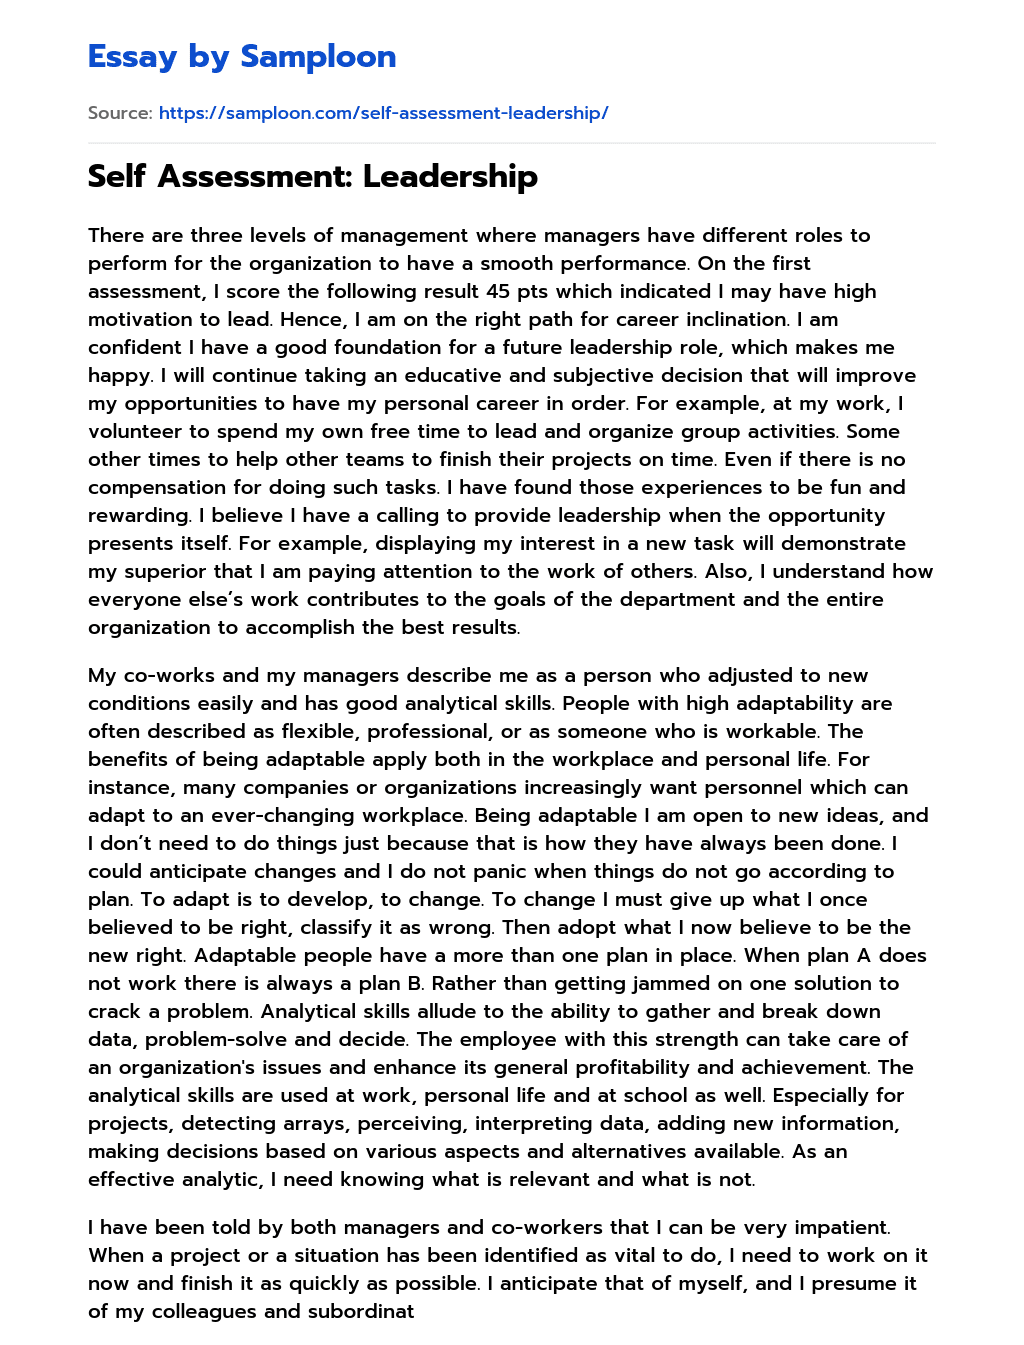 Self Assessment: Leadership essay